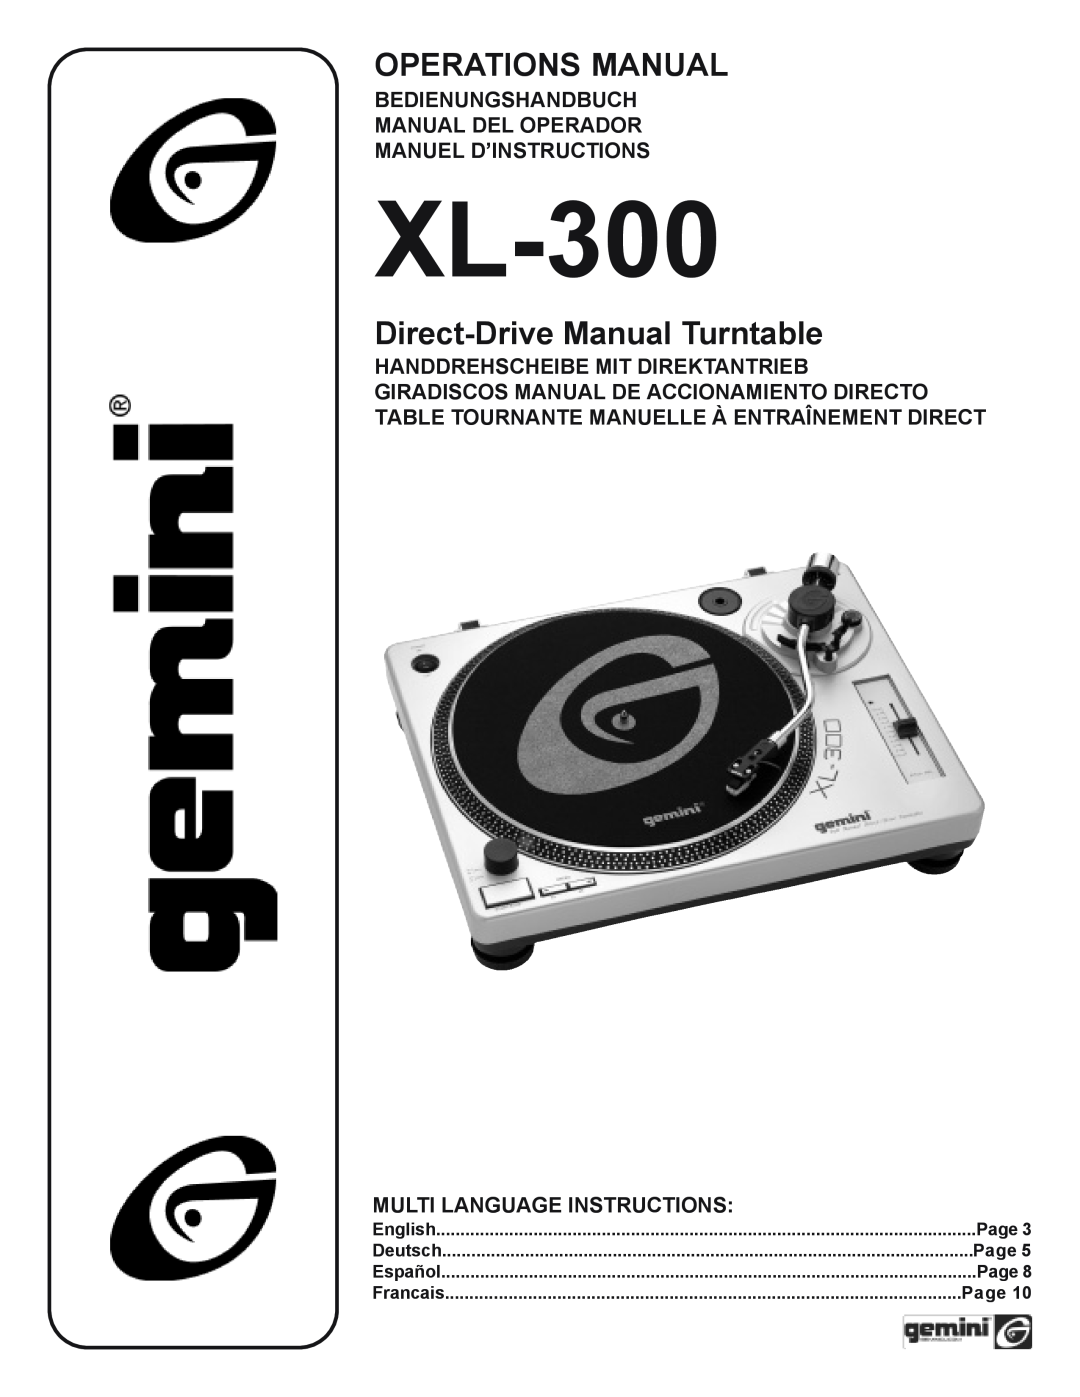 Gemini XL-300 manual Bedienungshandbuch Manual Del Operador, Manuel D’Instructions, Multi Language Instructions, Page 